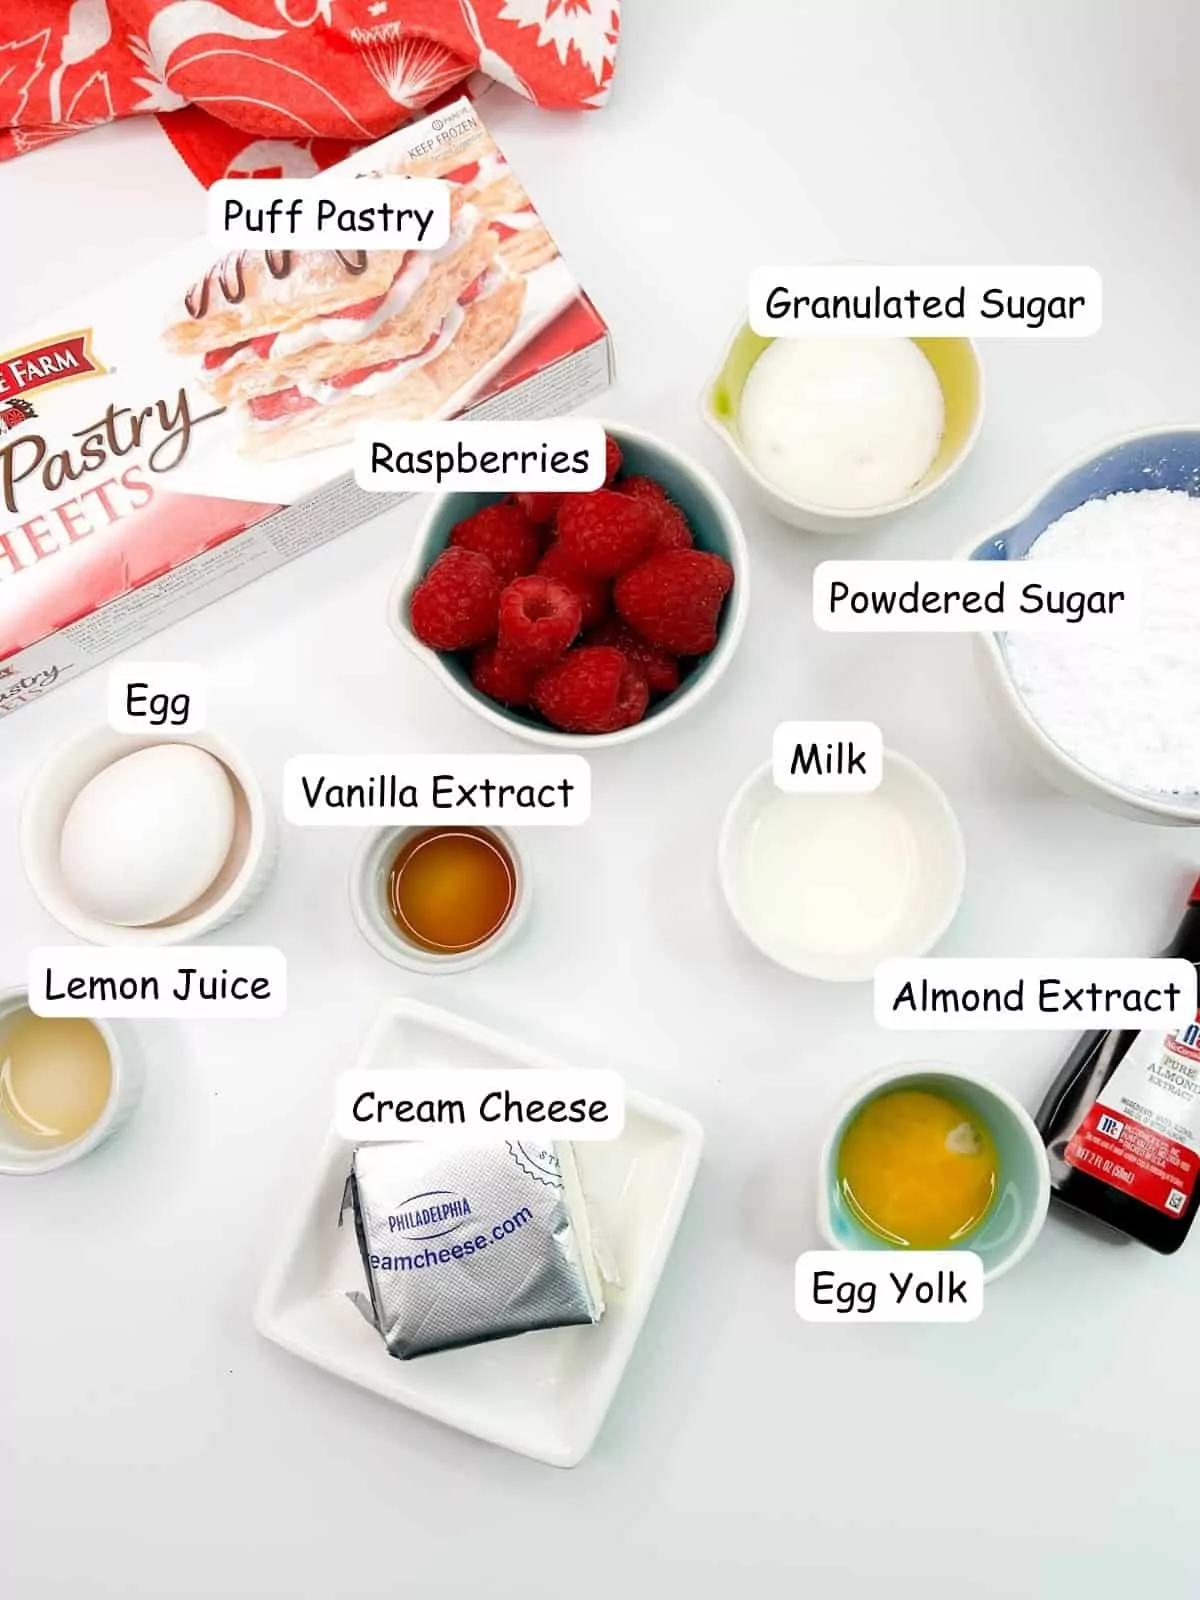 ingredients for homemade danish recipe made with cream cheese and fresh raspberries.